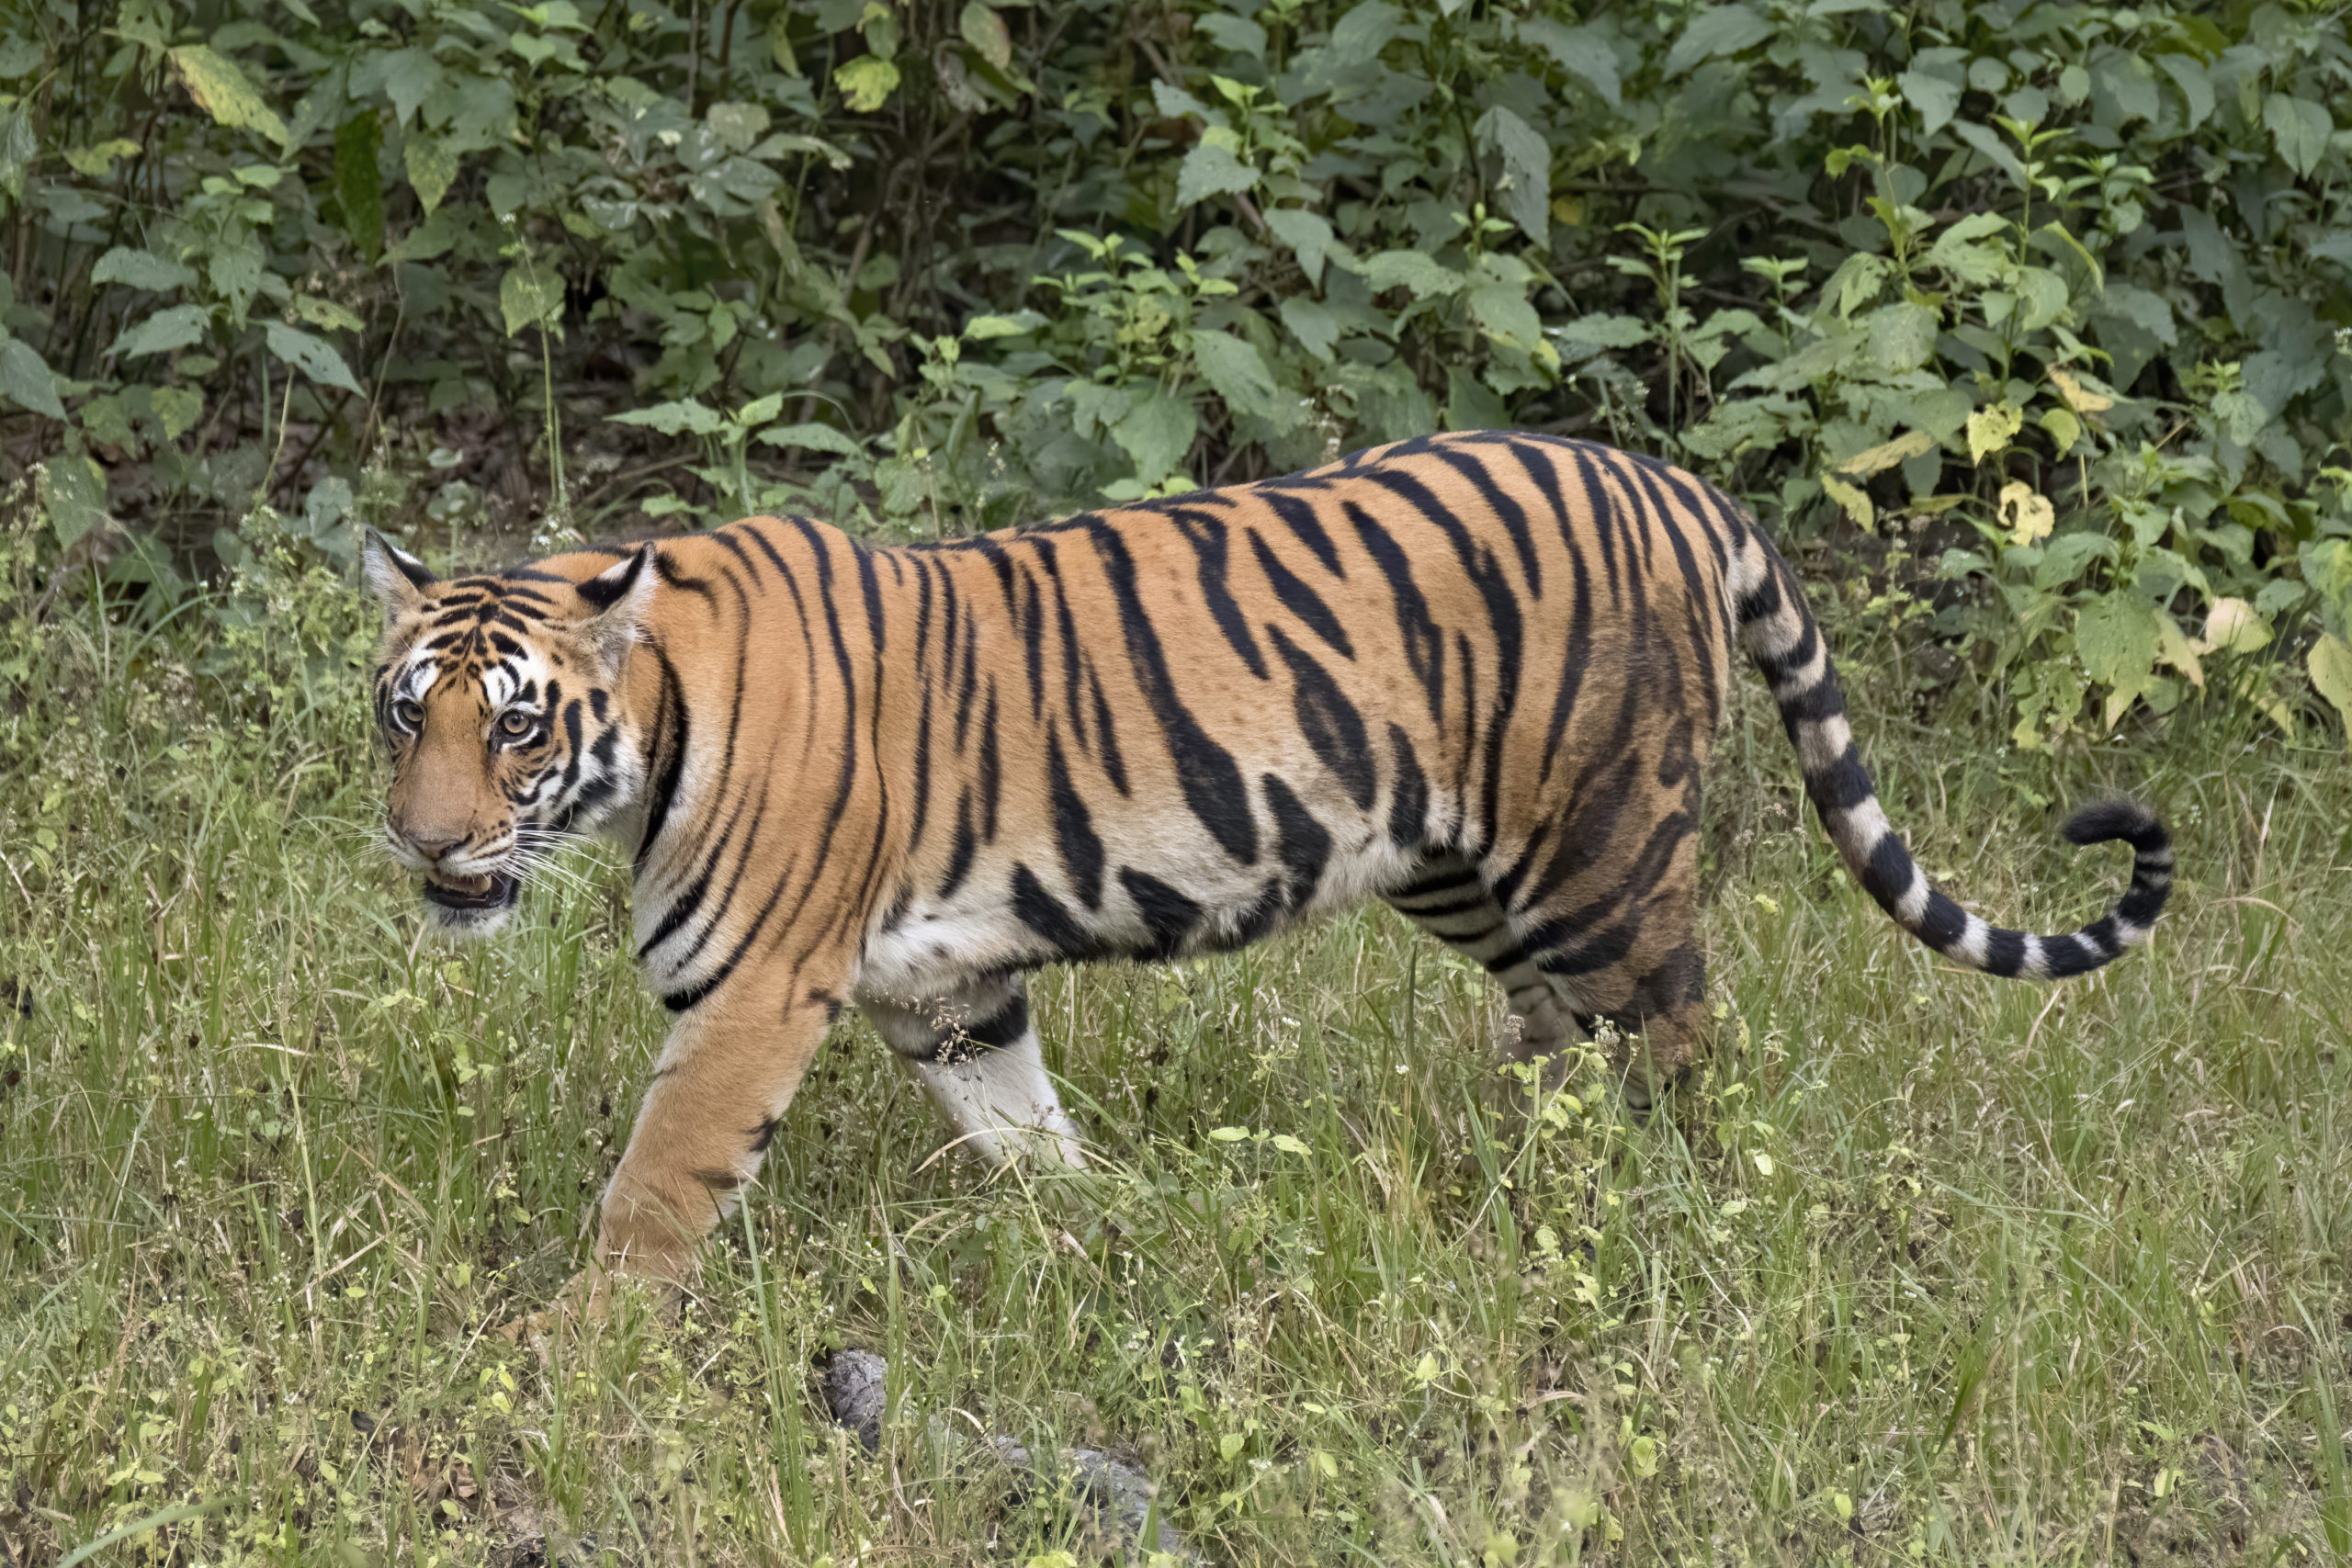 Tiger attack kills woman in Badiya